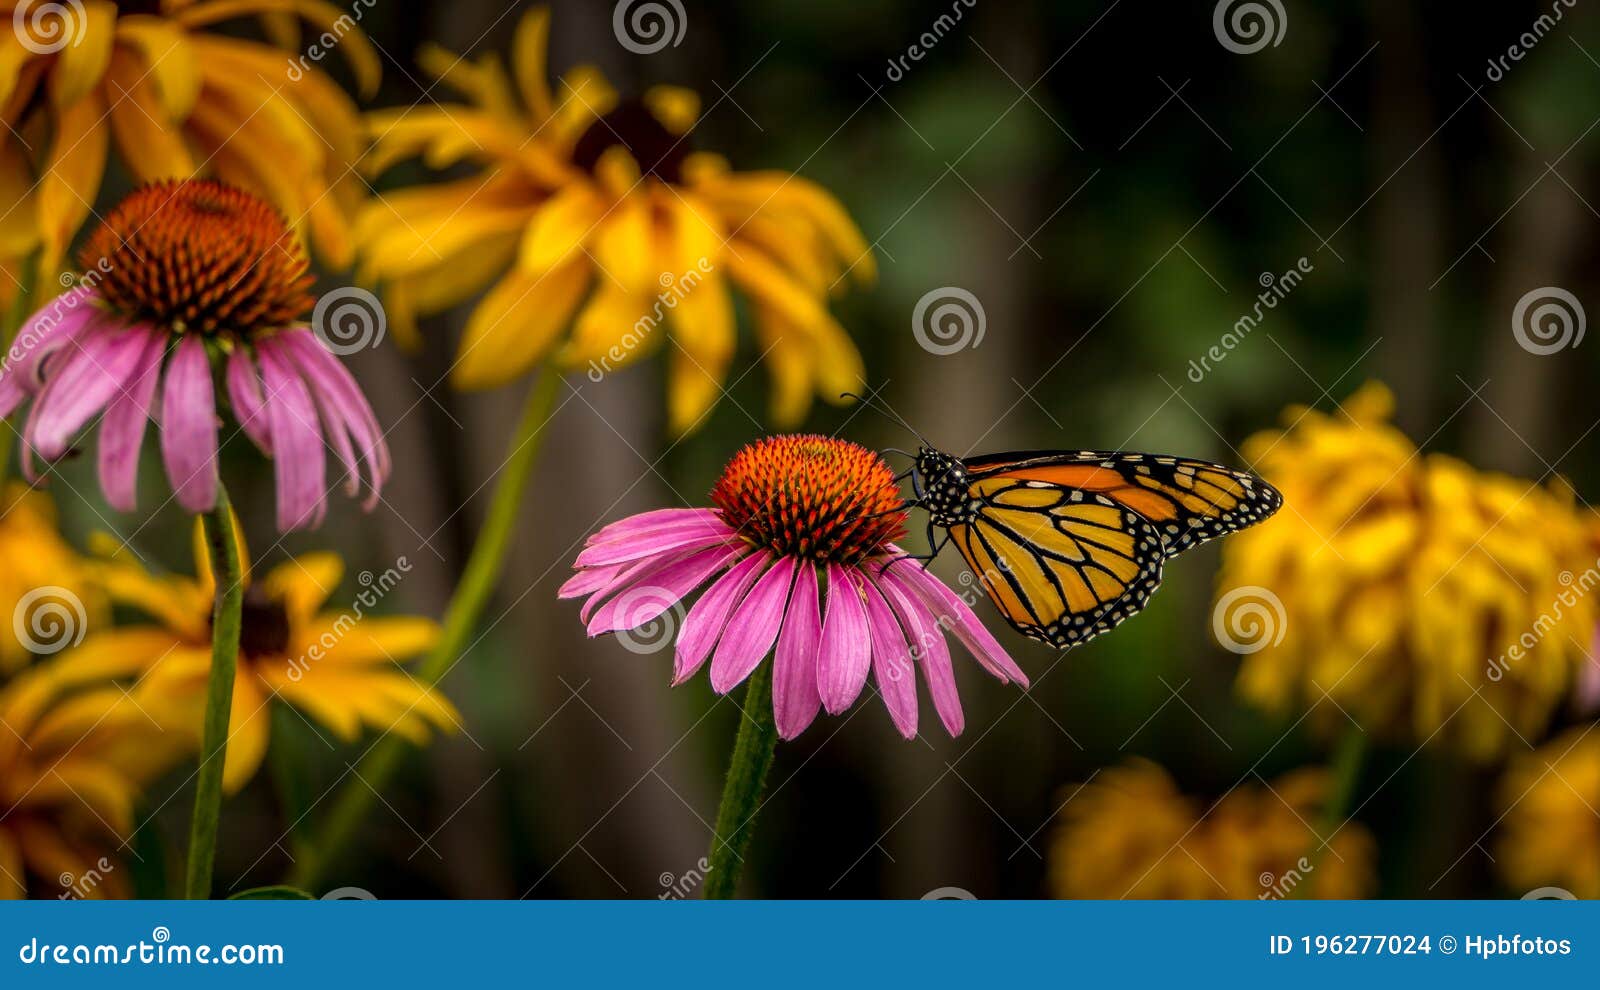 monarch butterfly on a purple echinacea coneflower